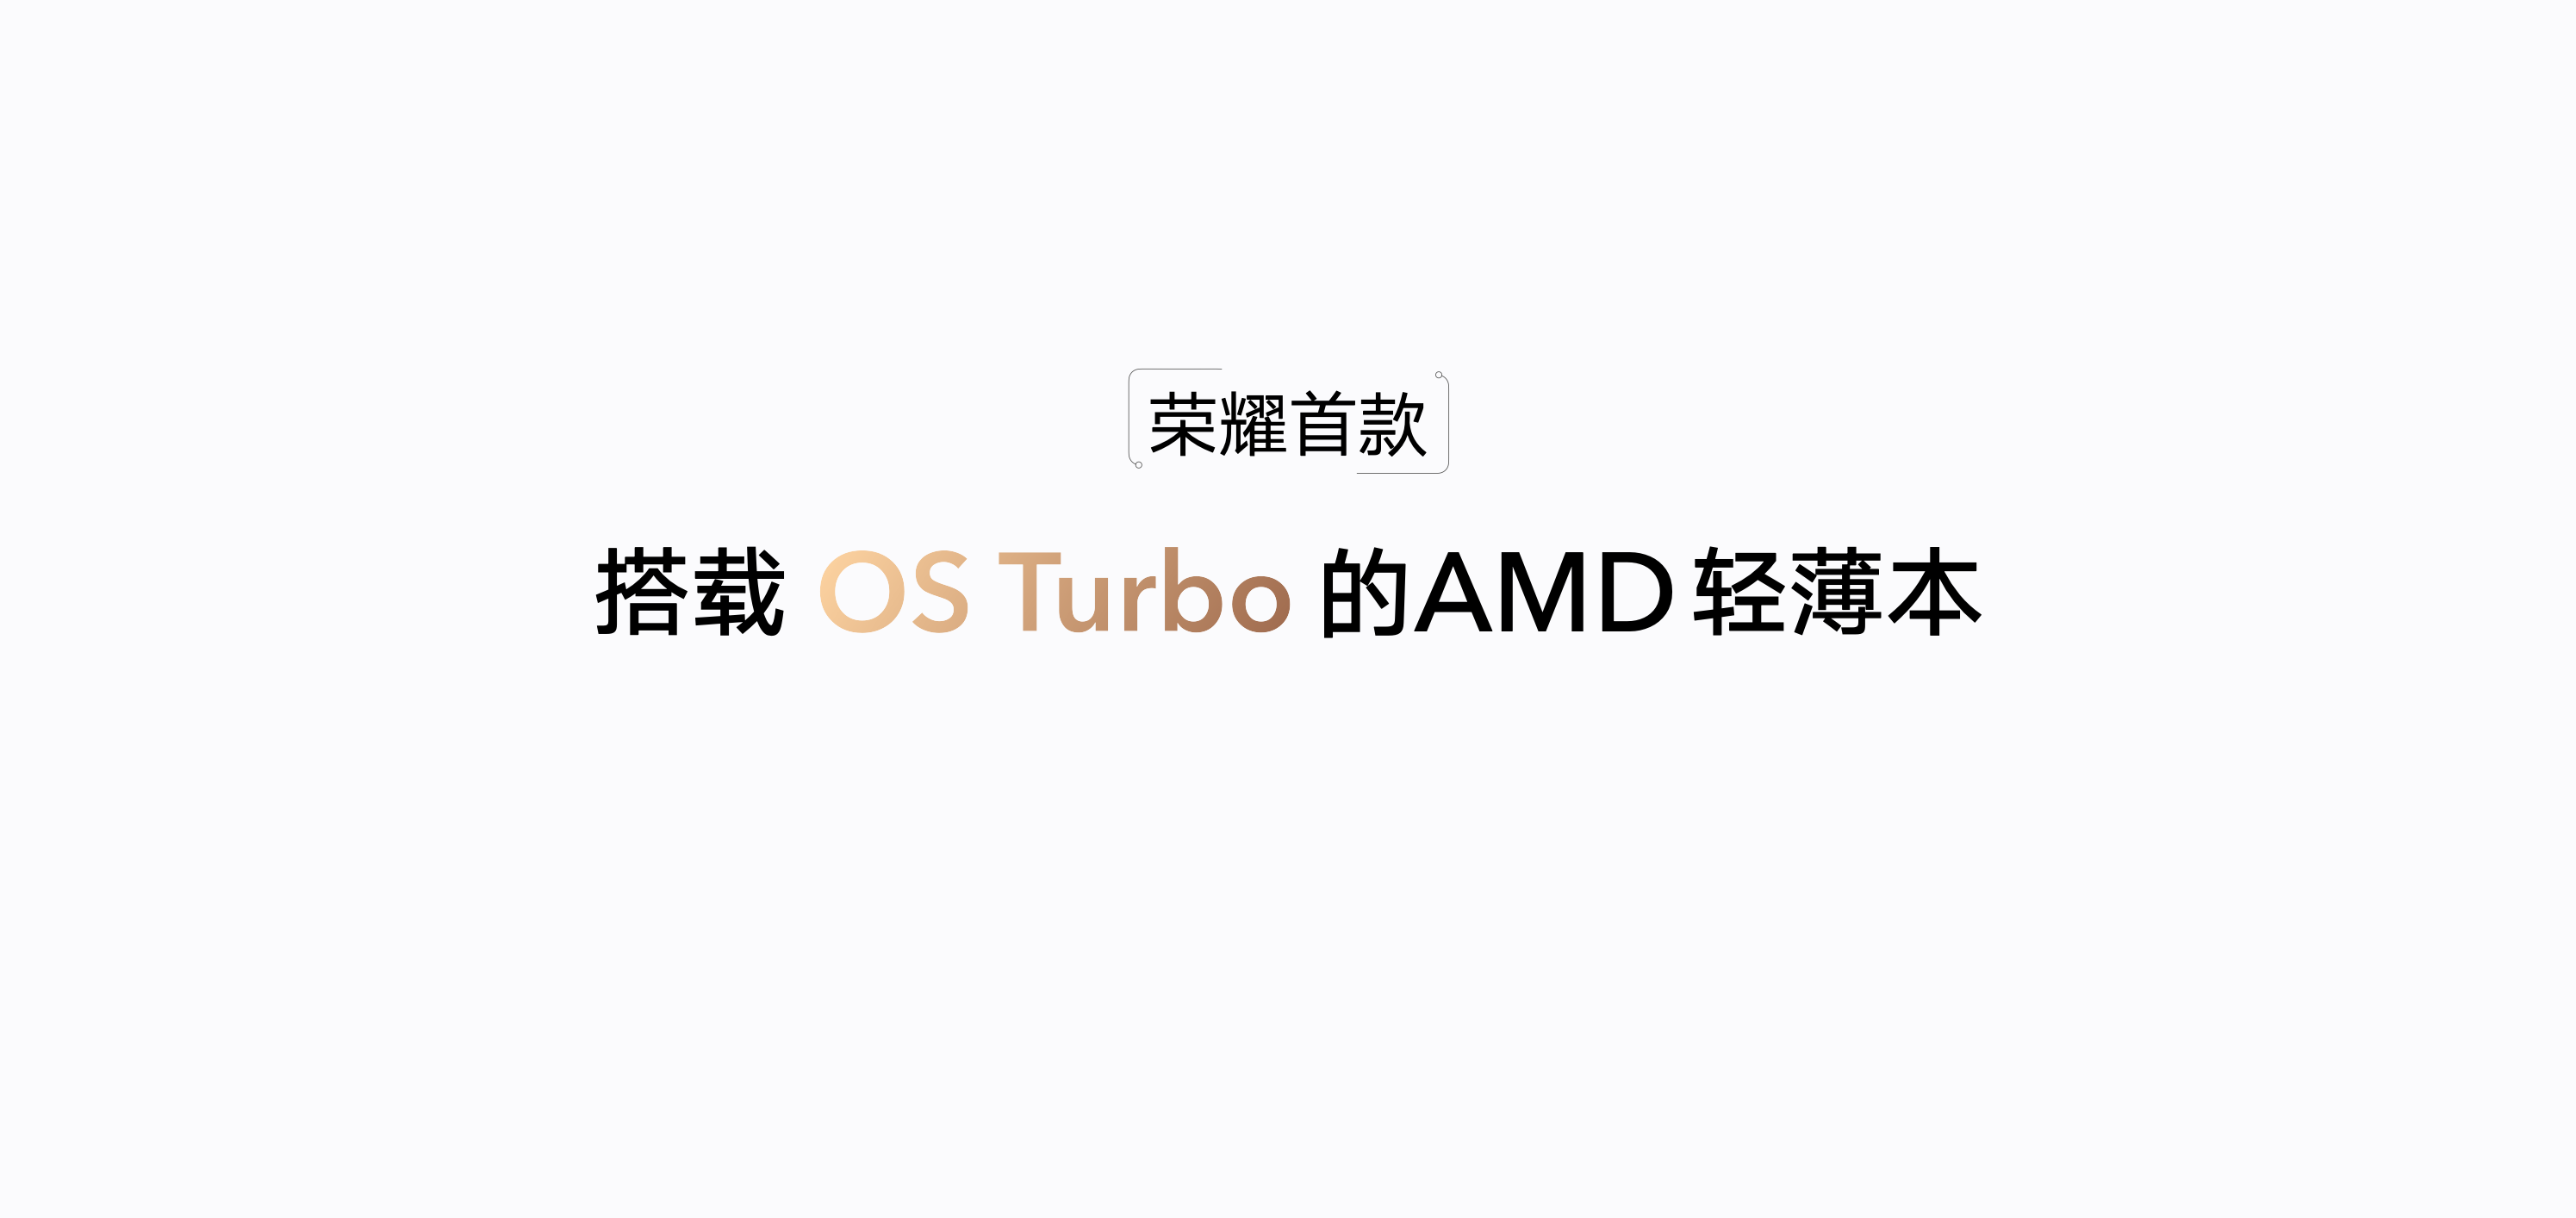 AMD平台首款搭载OS Turbo轻薄本，全新荣耀MagicBook 14 锐龙版正式发布